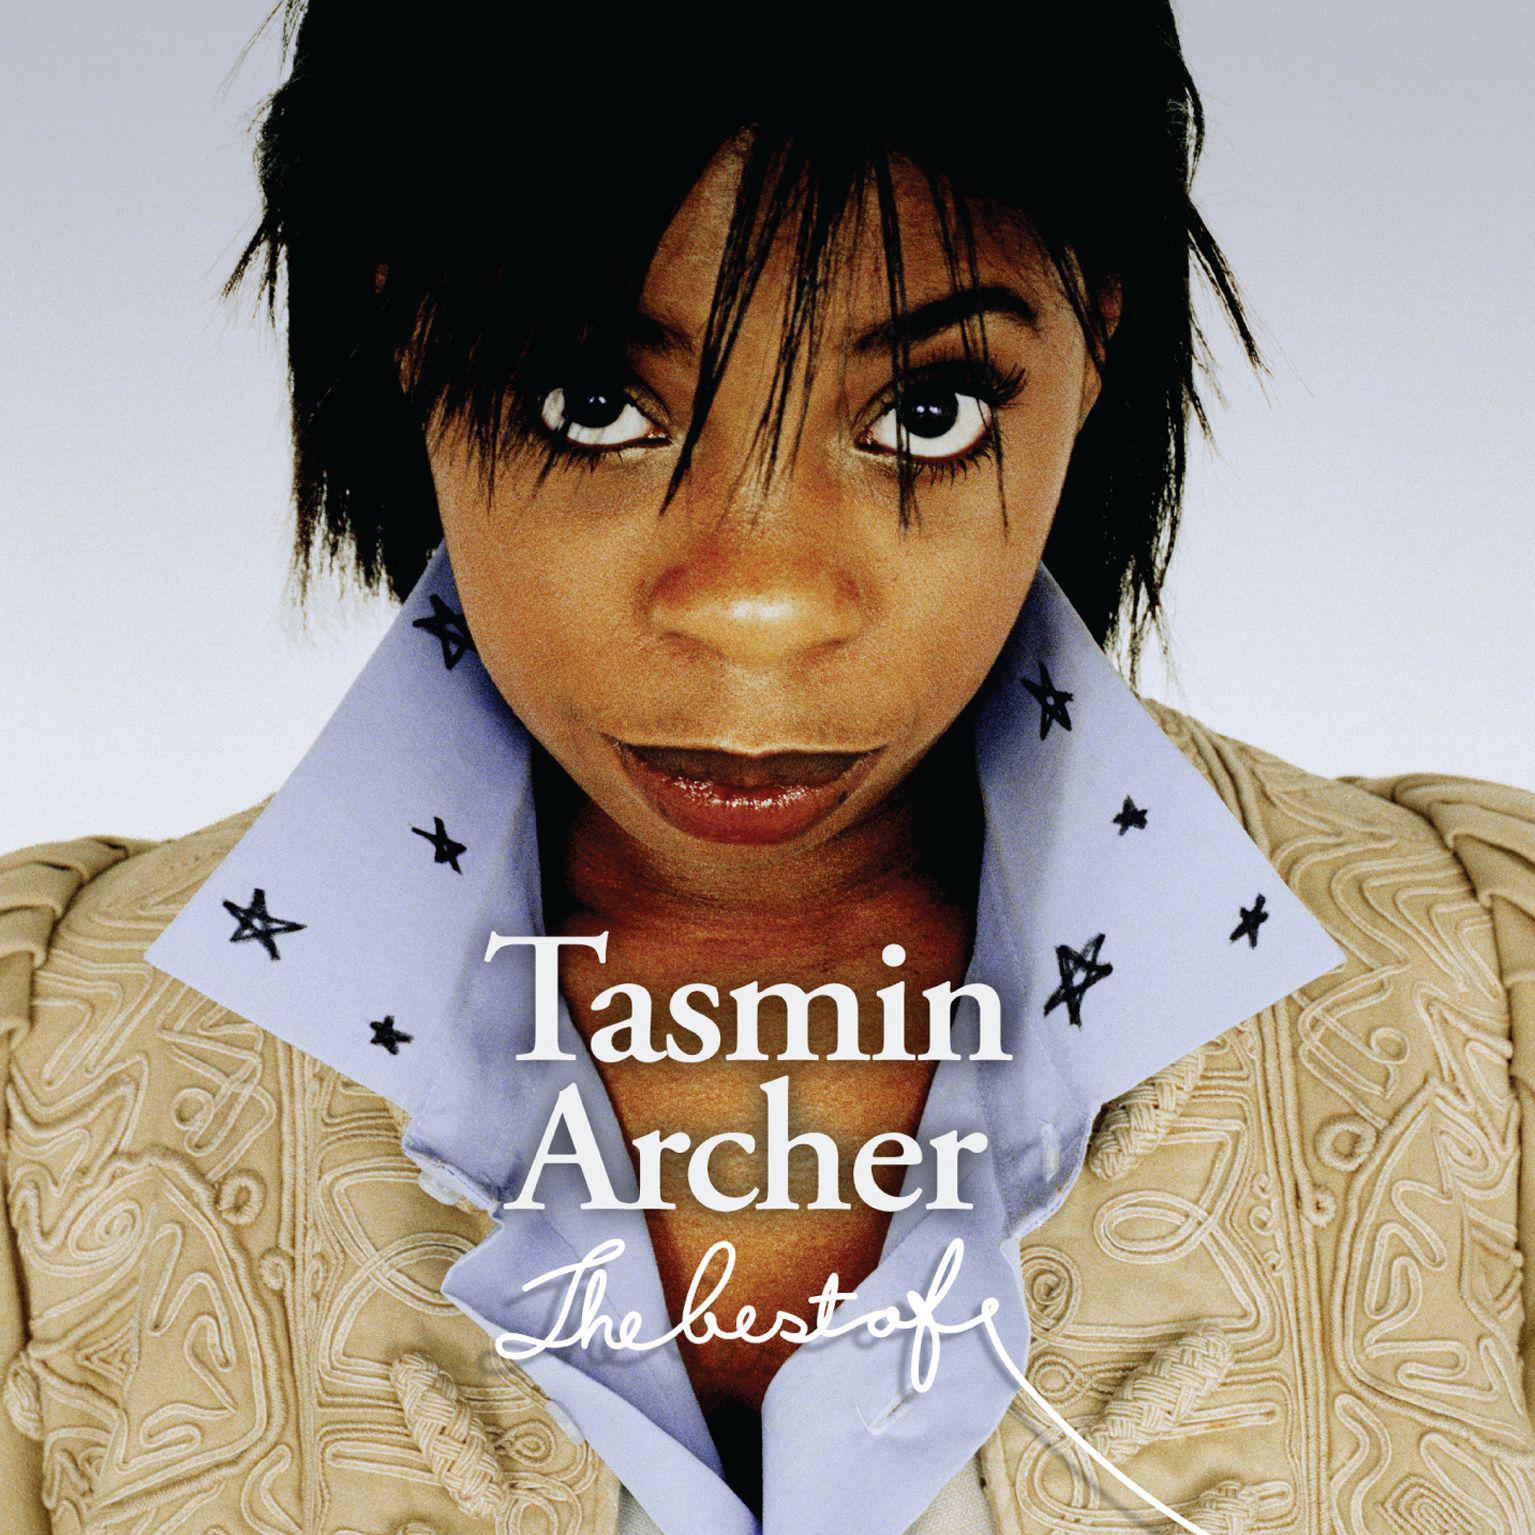 Tasmin Archer - Sleeping Satellite (Extended Version)